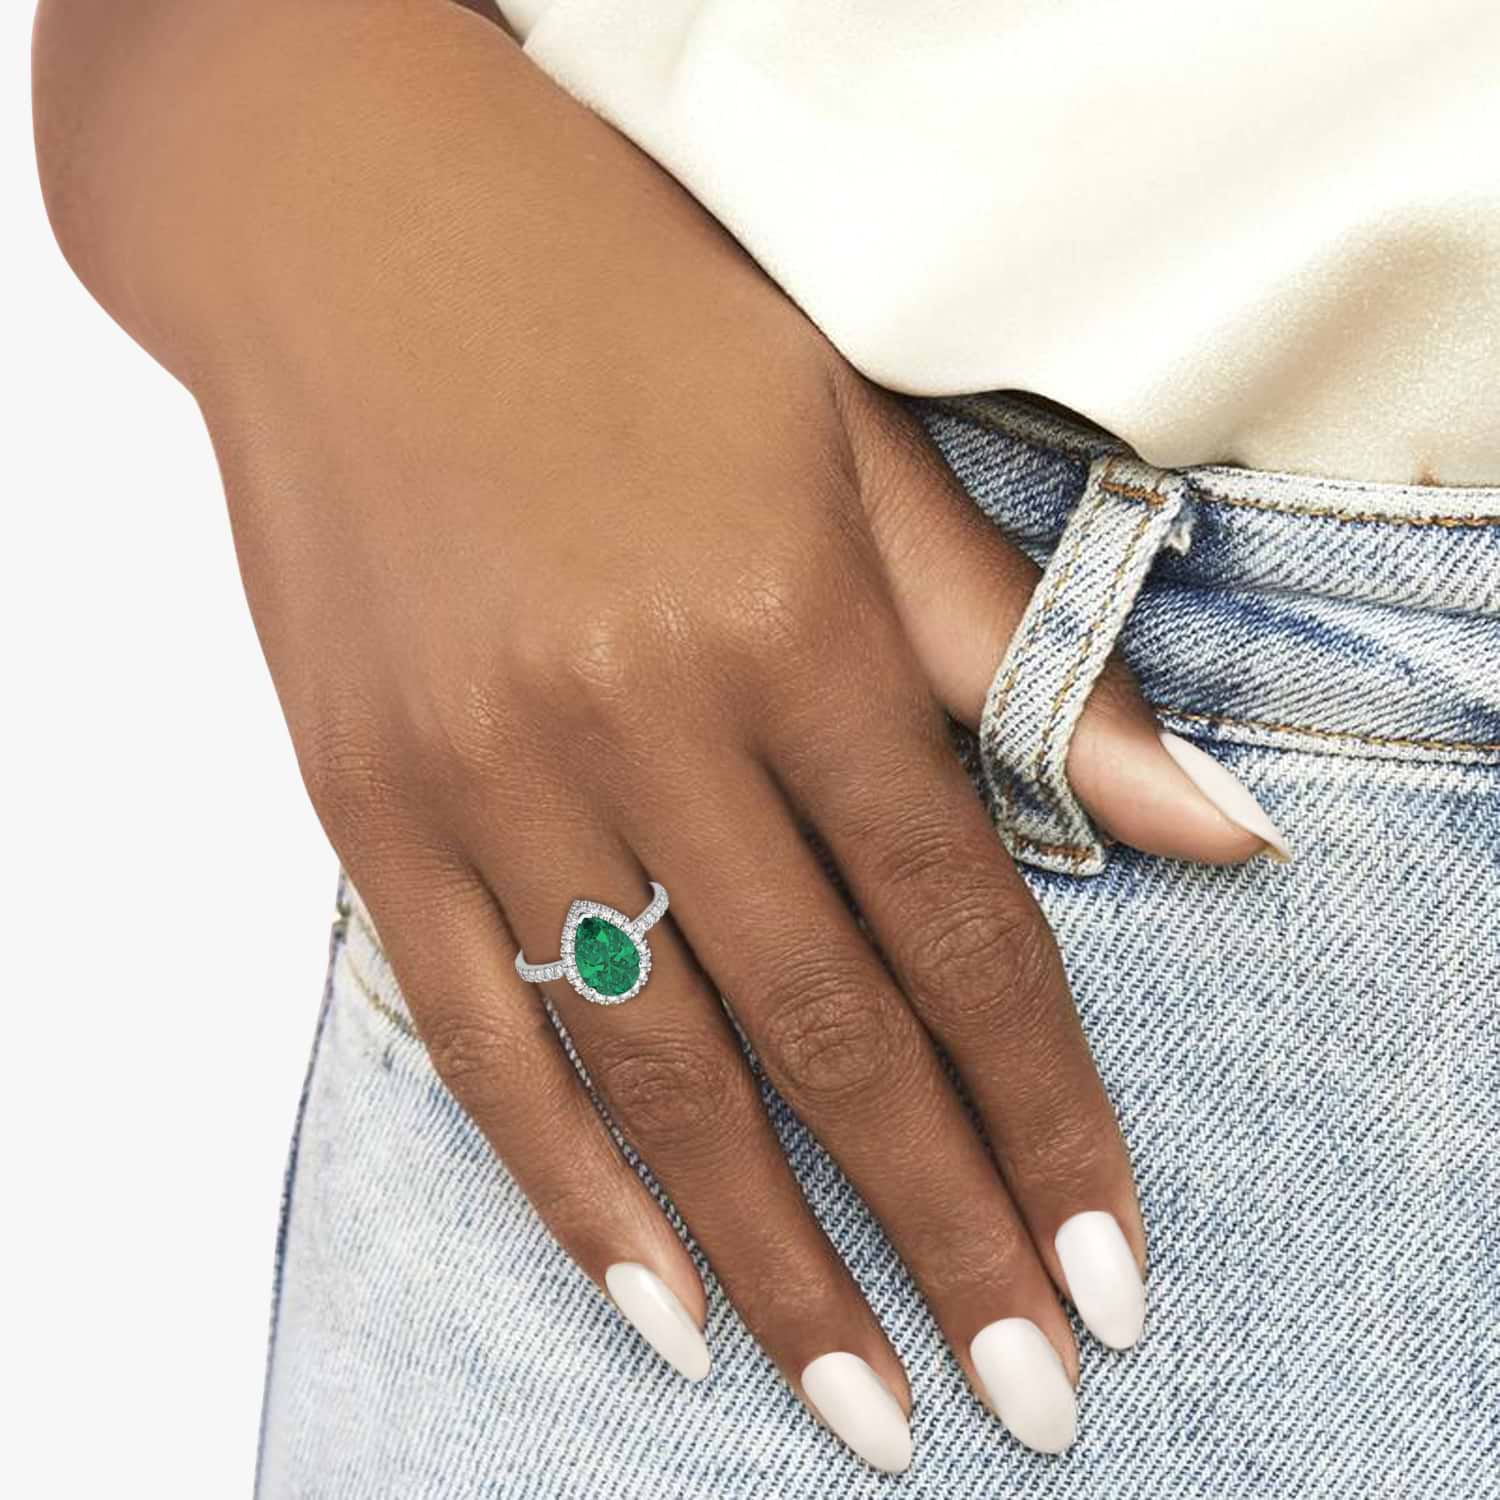 Pear Cut Halo Emerald & Diamond Engagement Ring 14K White Gold 3.21ct